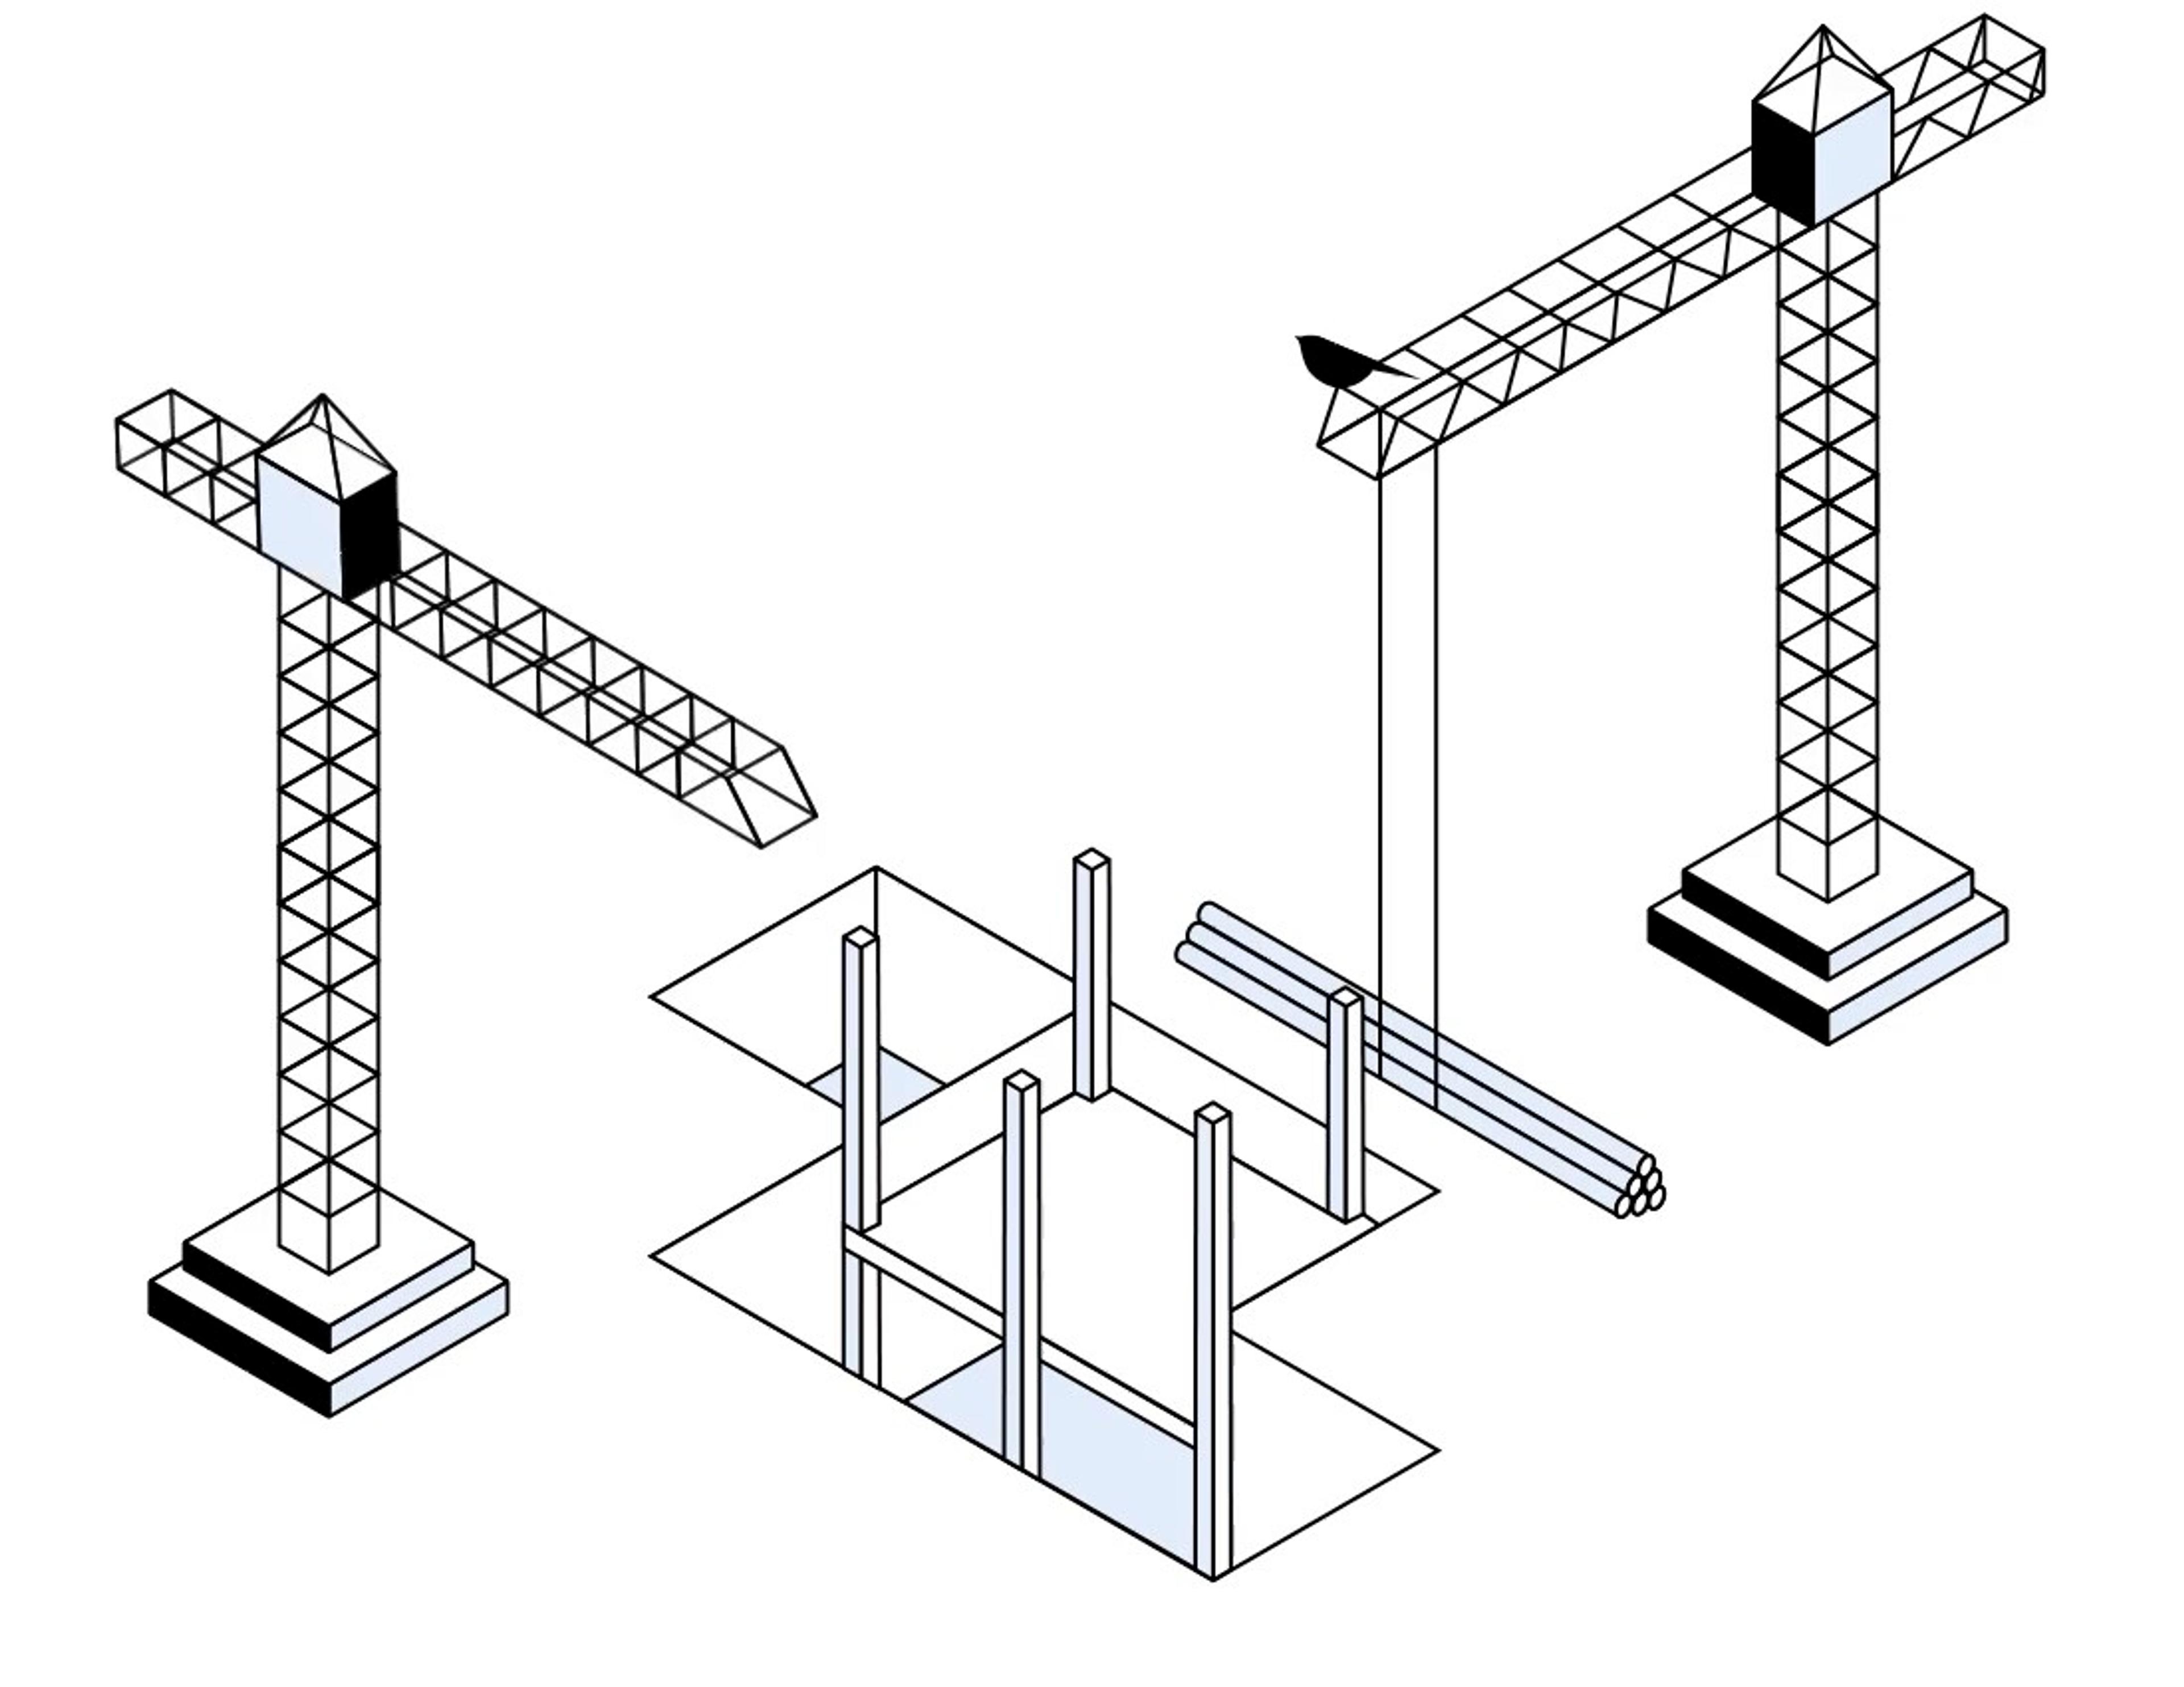 Animated illustration of cranes building